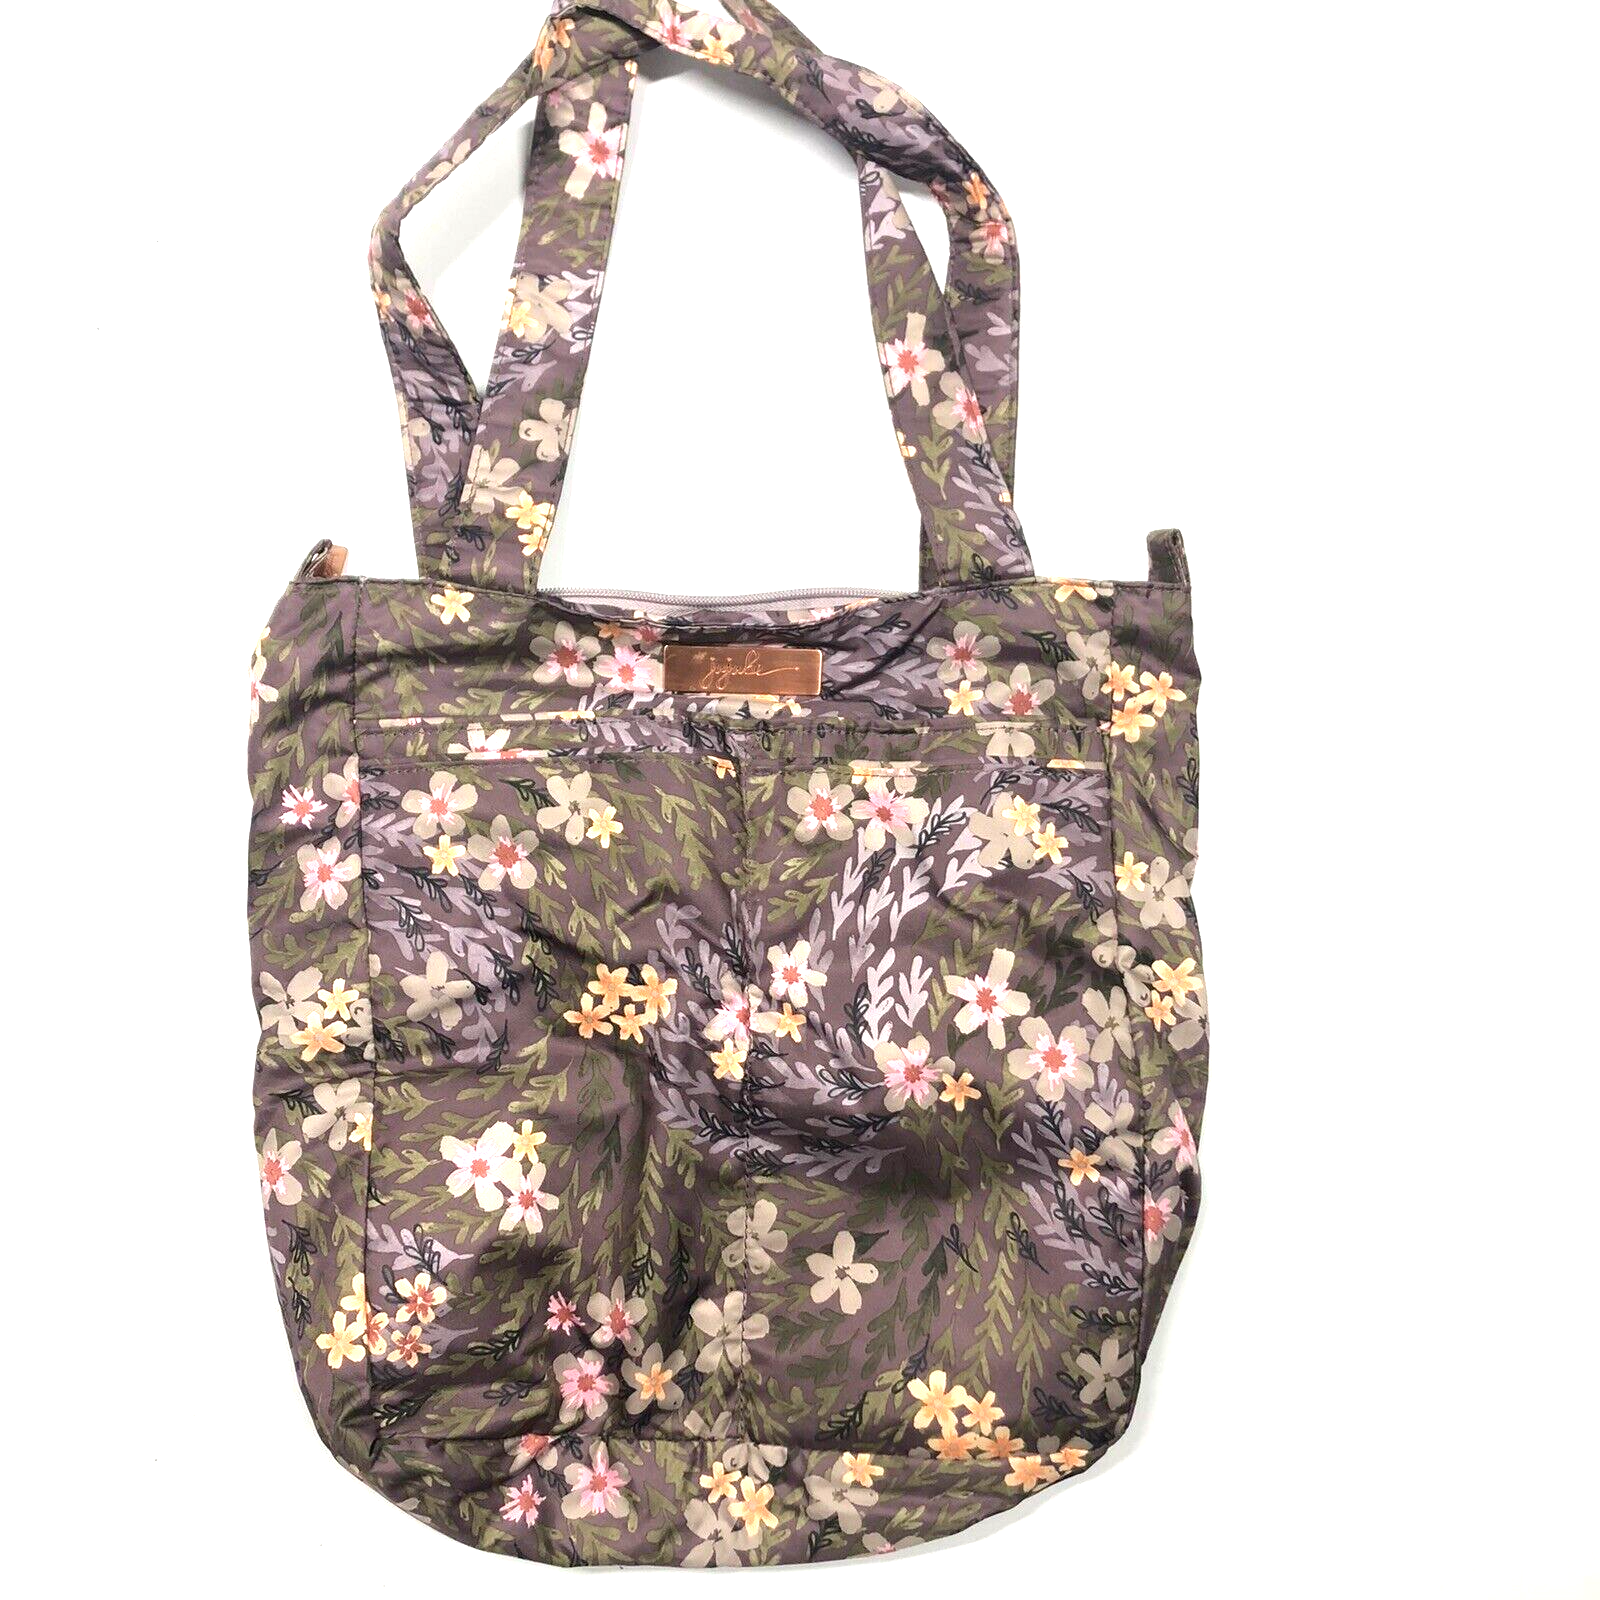 Jujube Sakura Dusk Be Light Diaper Bag Shoulder Purple - £28.60 GBP